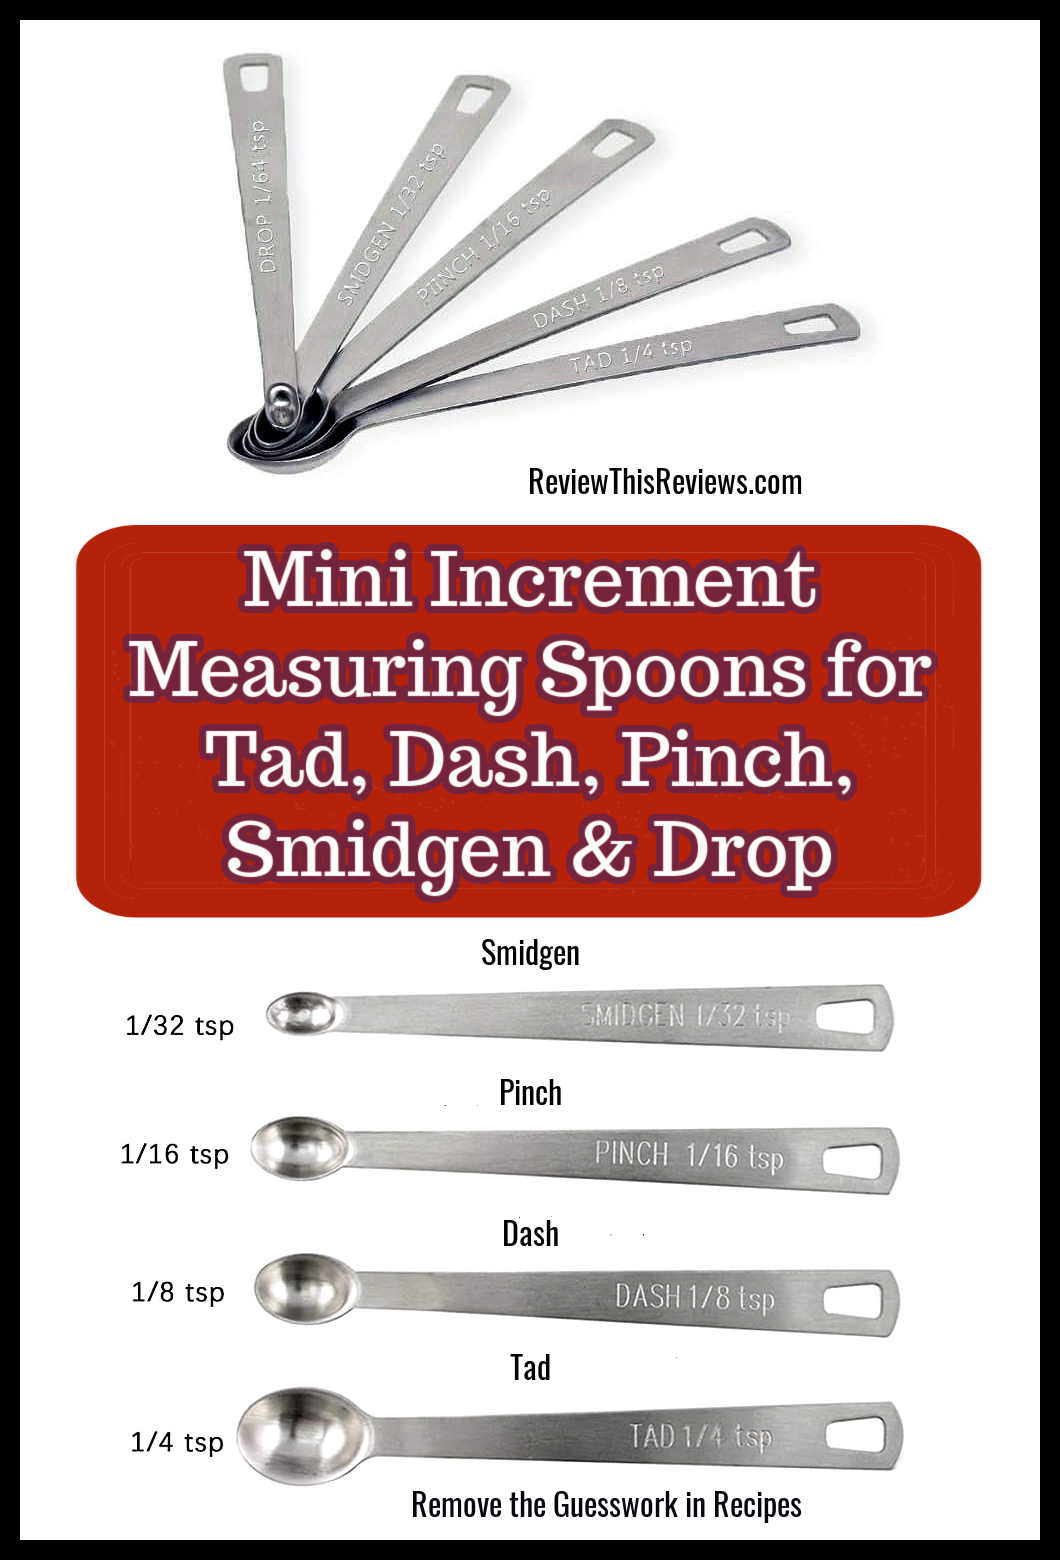 mini-increment-measuring-spoons-for-tad-dash-pinch-smidgen-drop